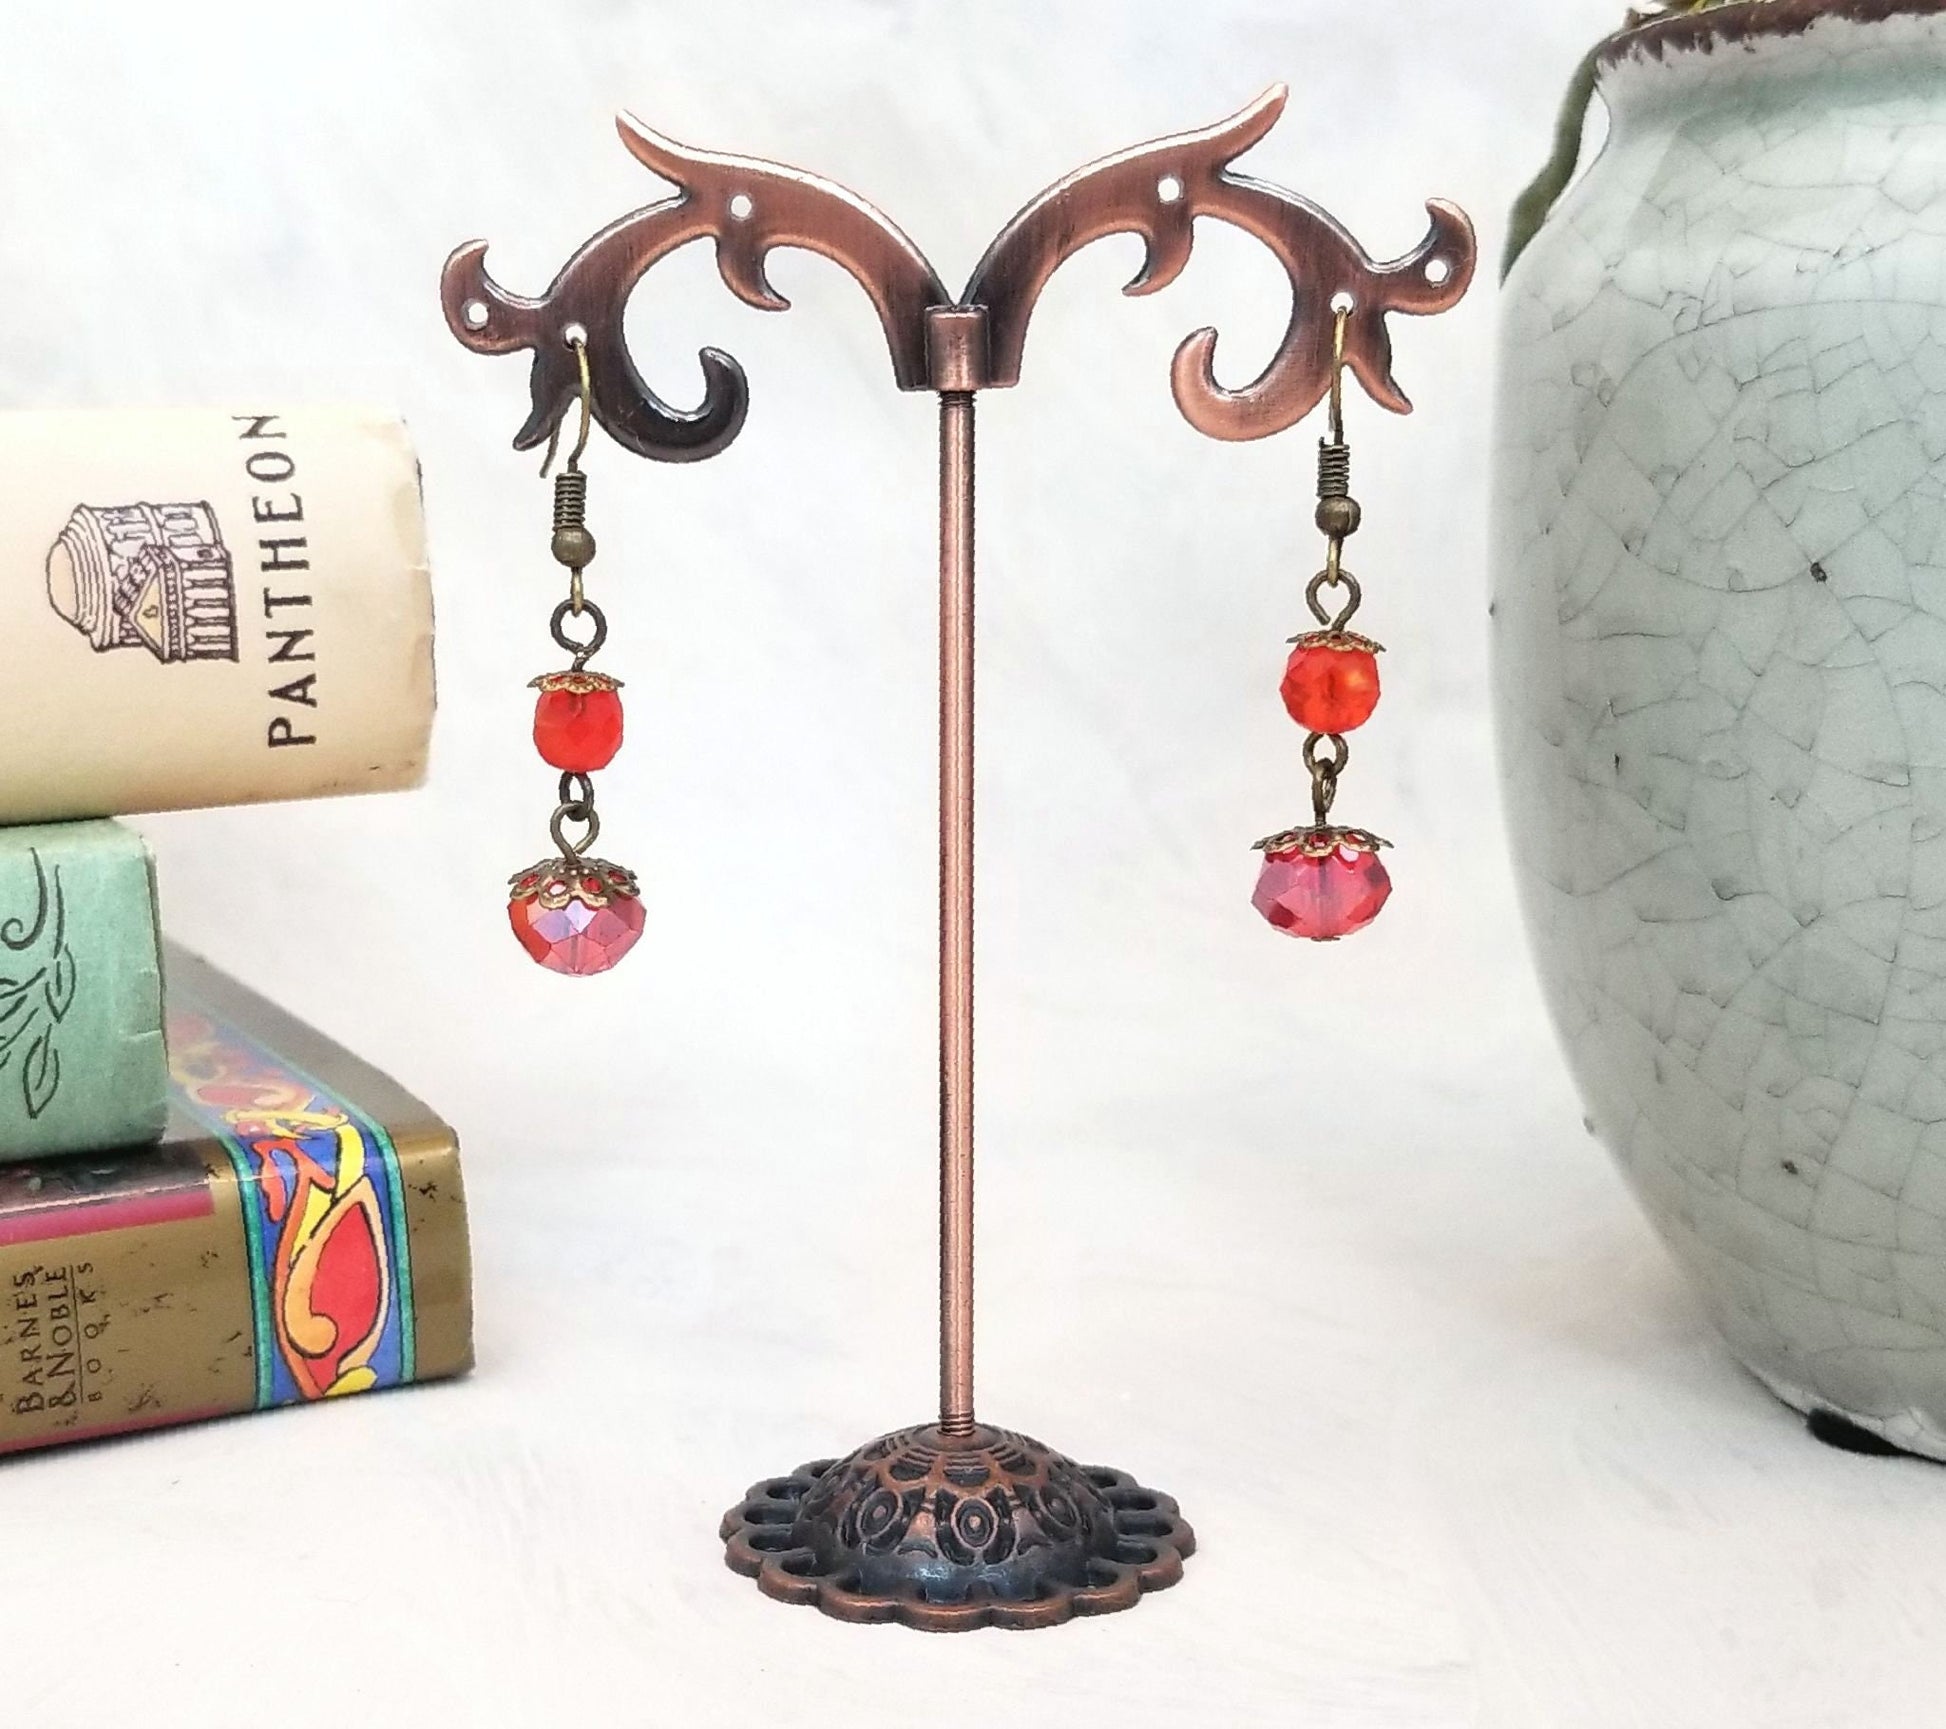 2-Tier Earrings in Hyacinth Red-Orange, Wedding, Bridesmaid, Art Nouveau, Belle Époque, Renaissance, Garden, Choice of Metals Closure Types